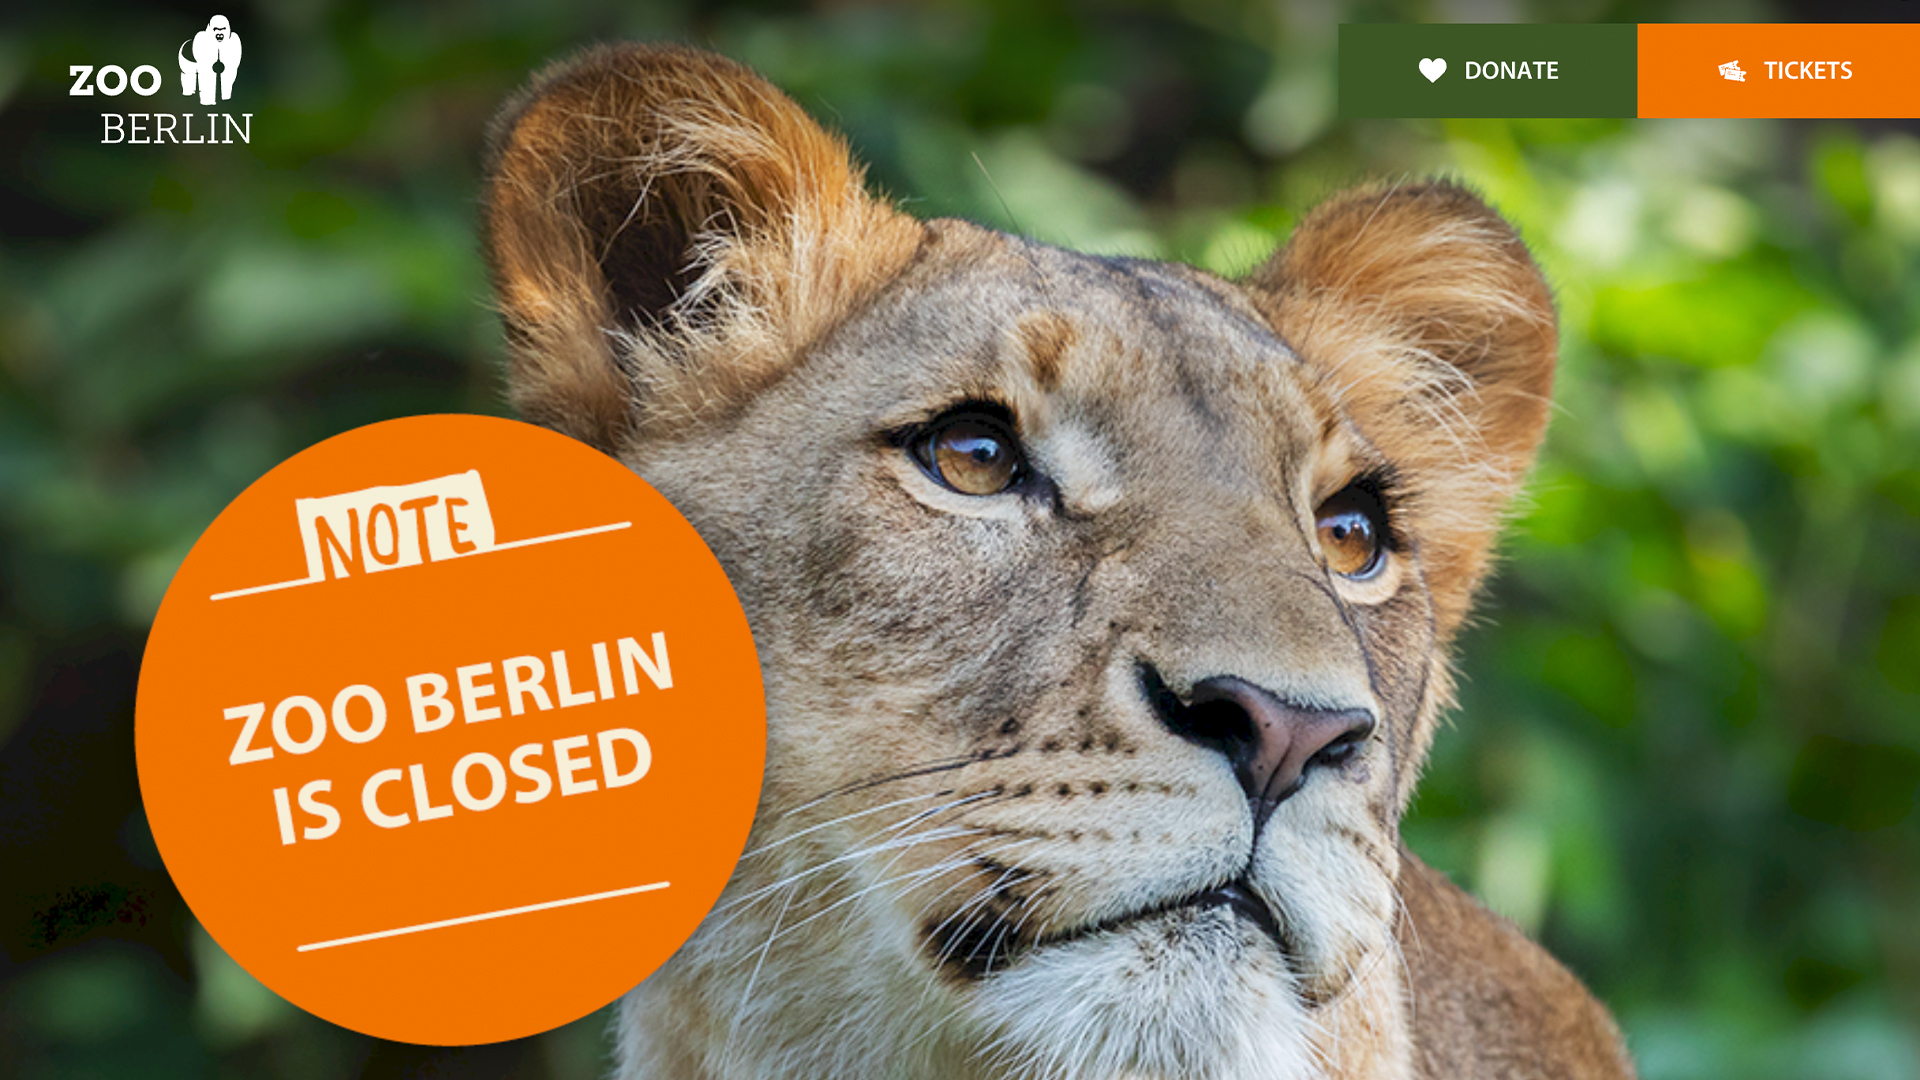 Berlin zoo website announcing closure./Berlin Zoo